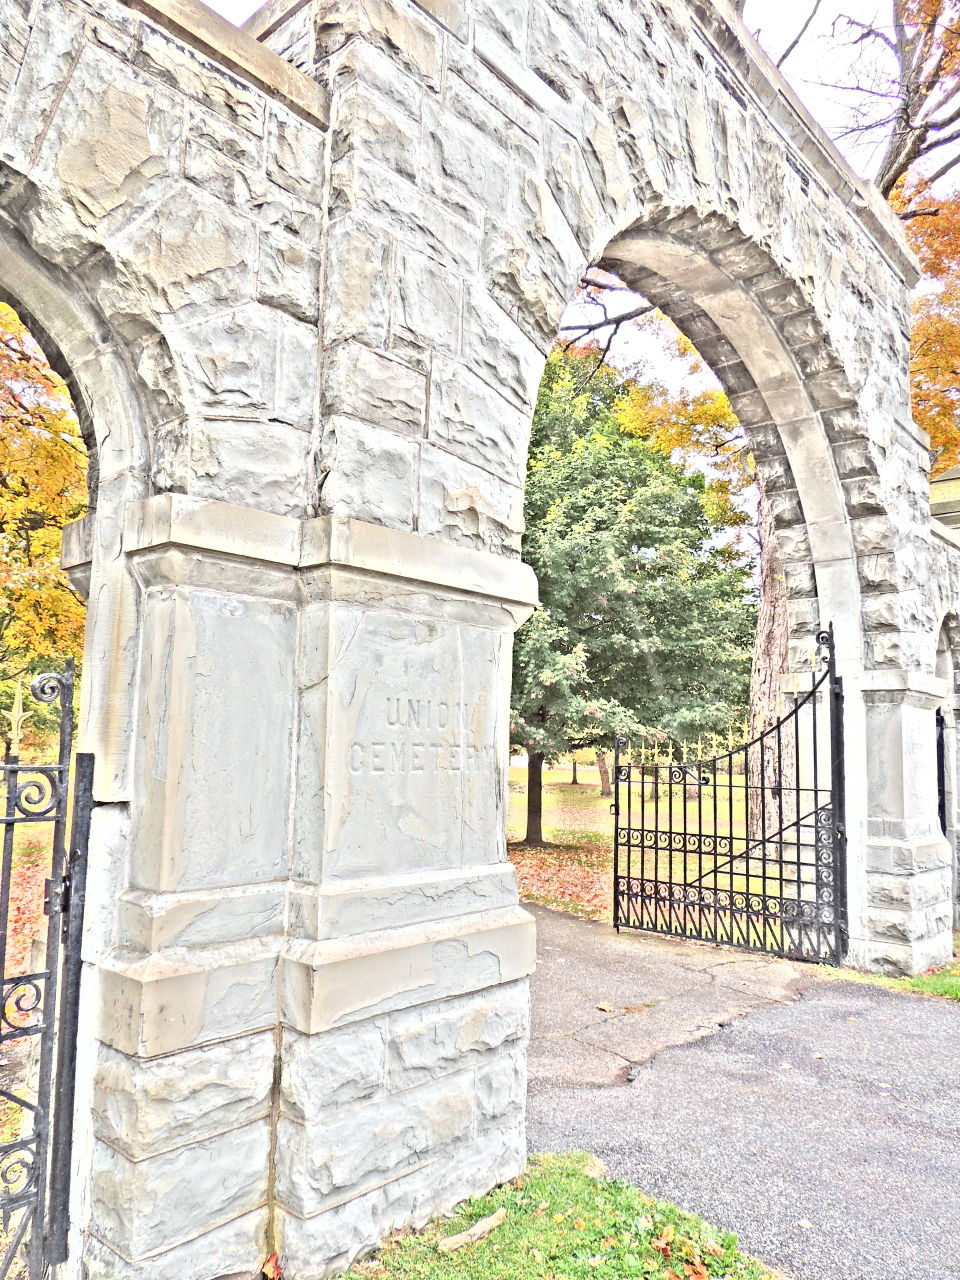 cemetery gate